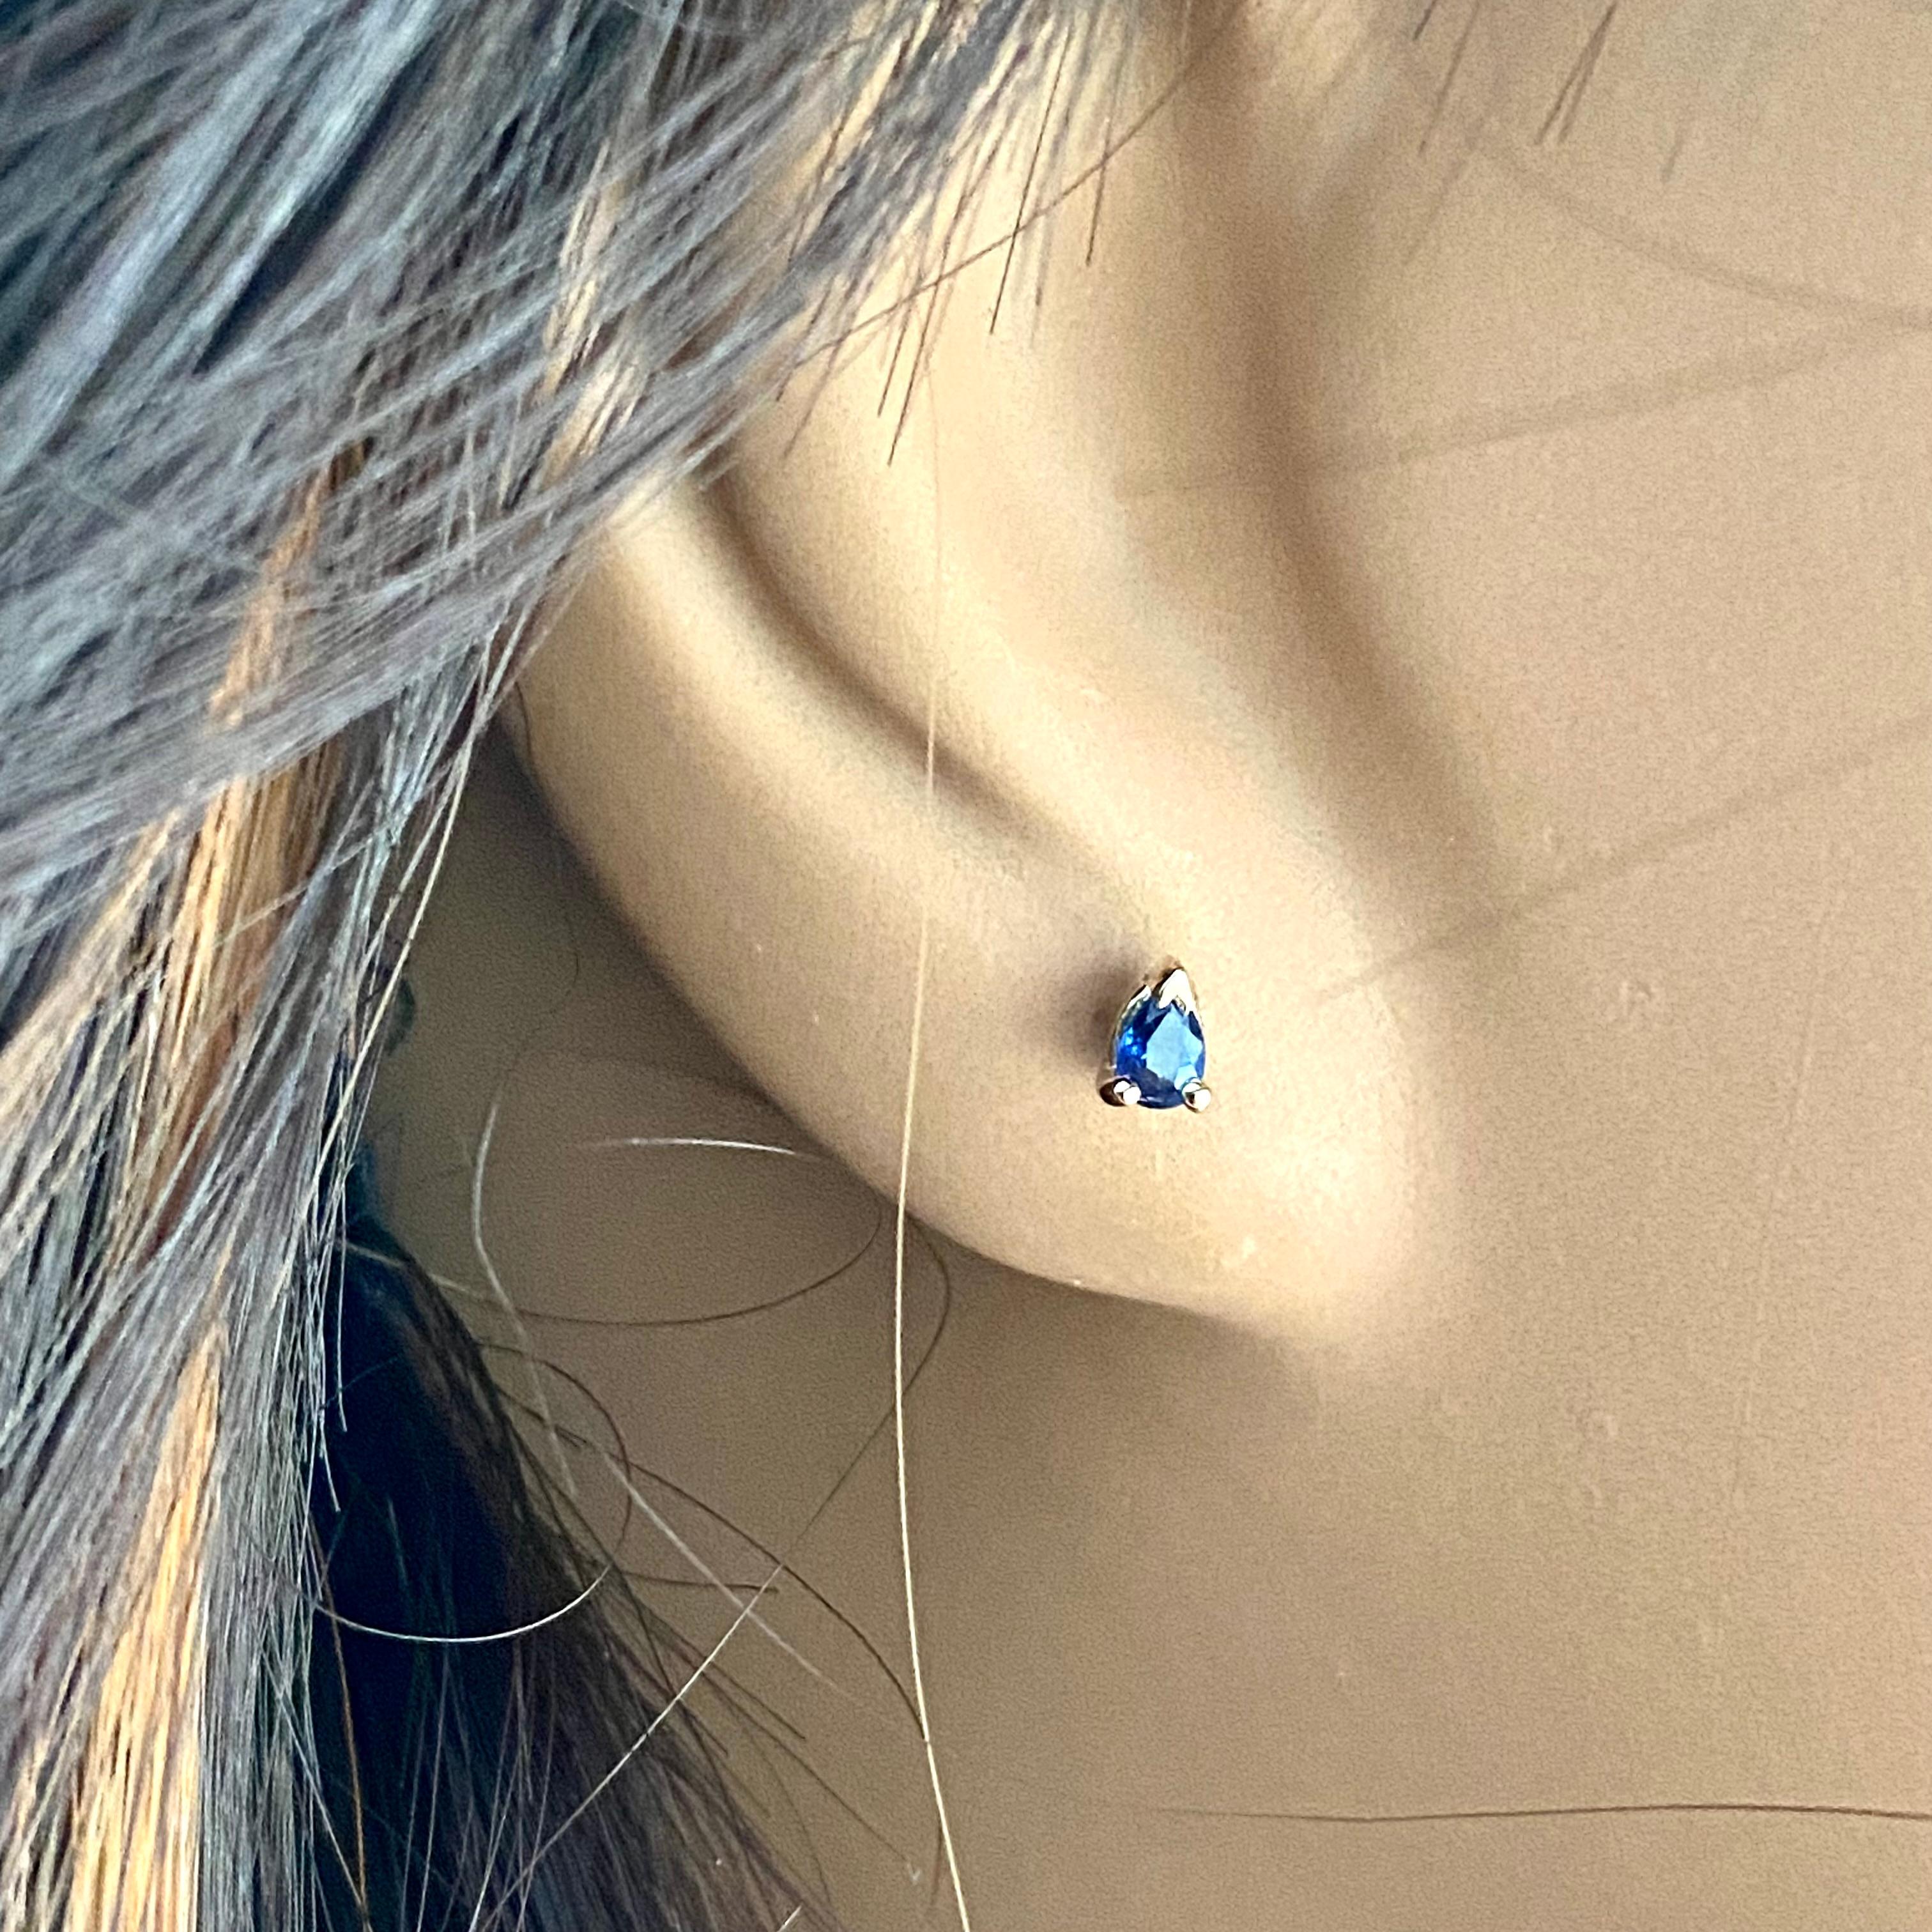 third hole earrings